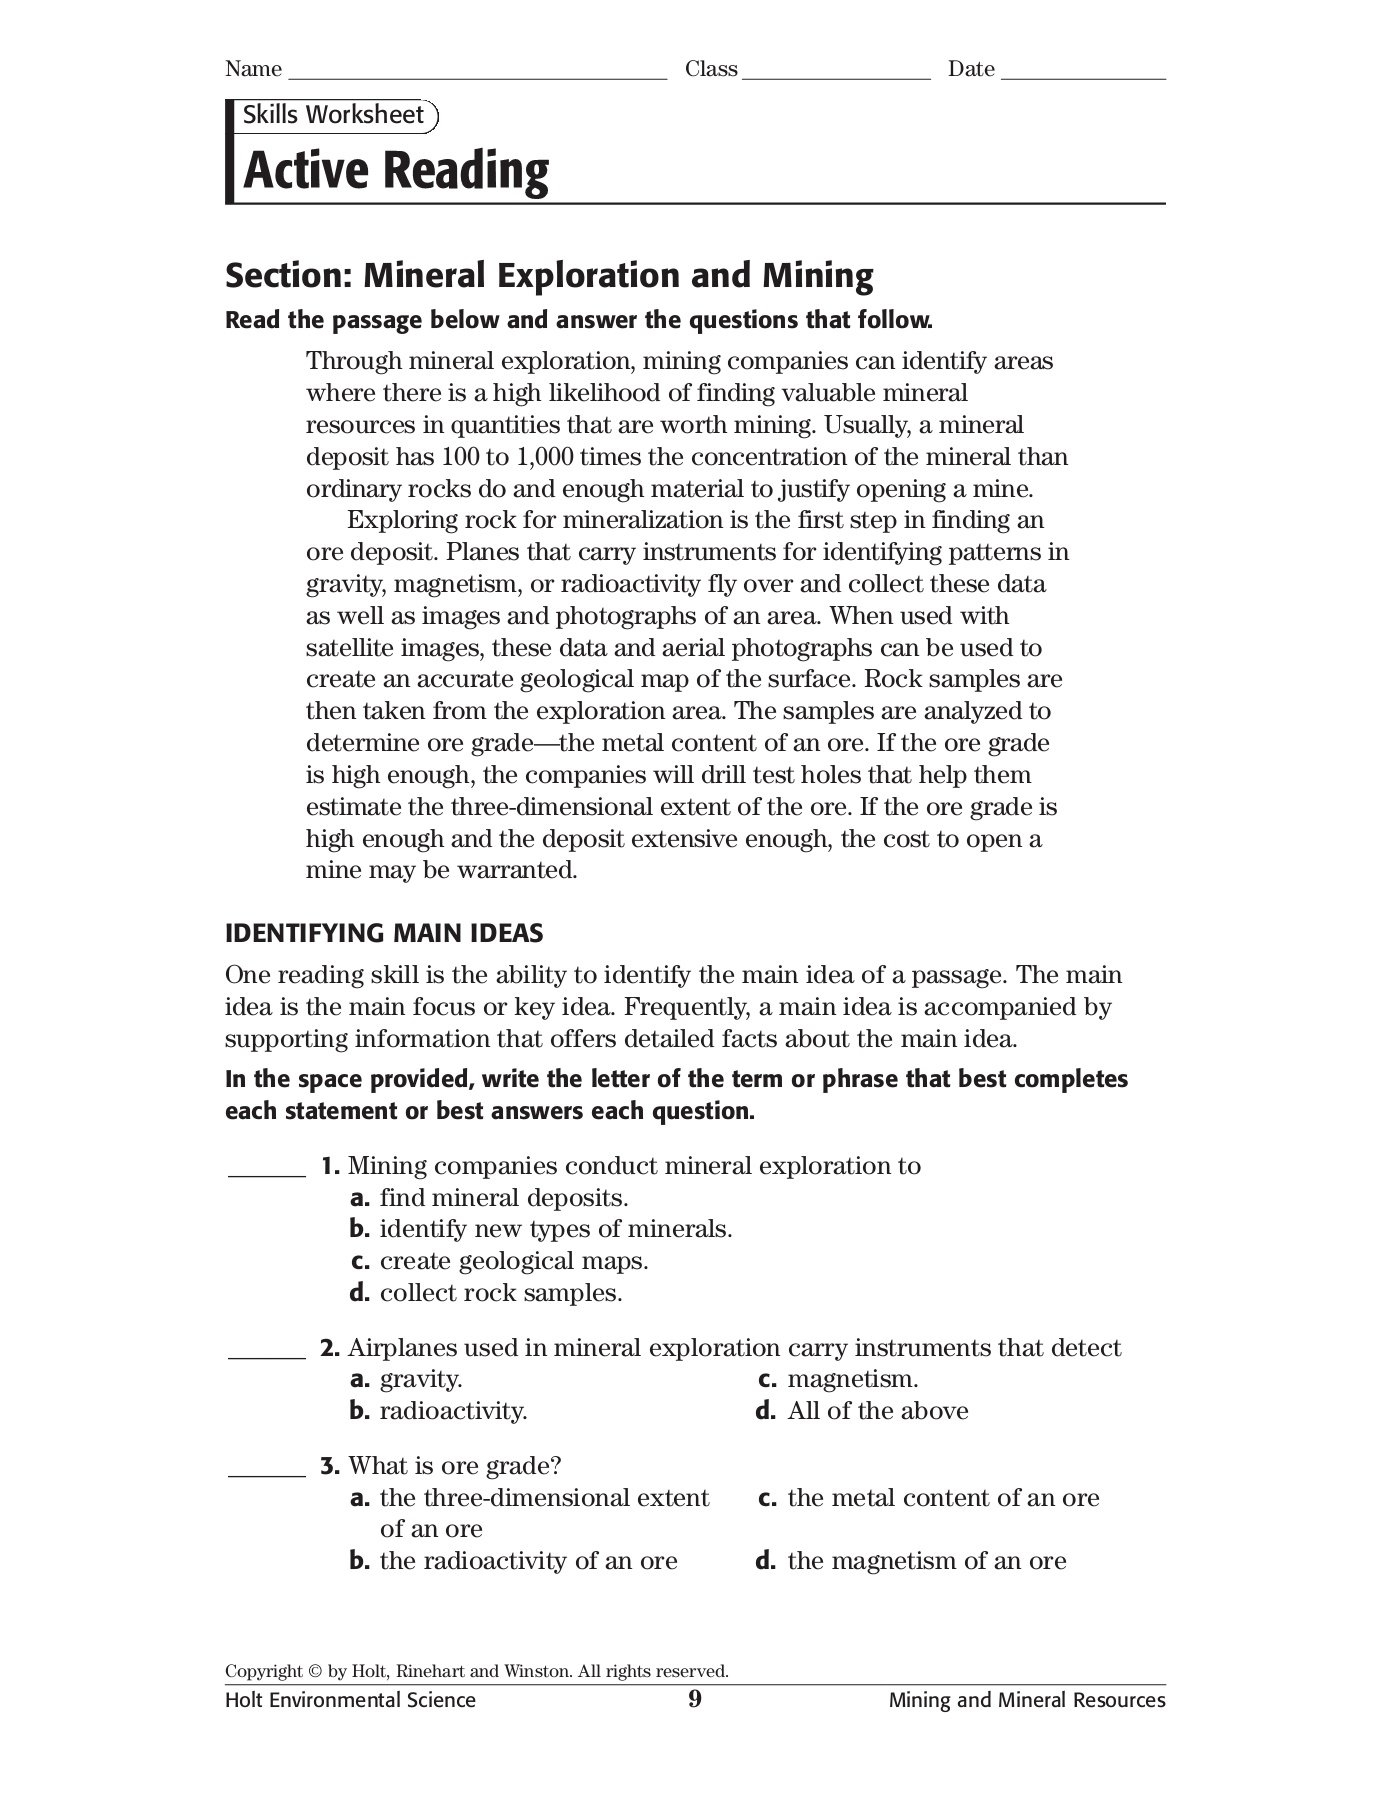 Skills Worksheet Active Reading  Calhounk12Al Pages 1  6 For Holt Environmental Science Skills Worksheet Active Reading Answer Key